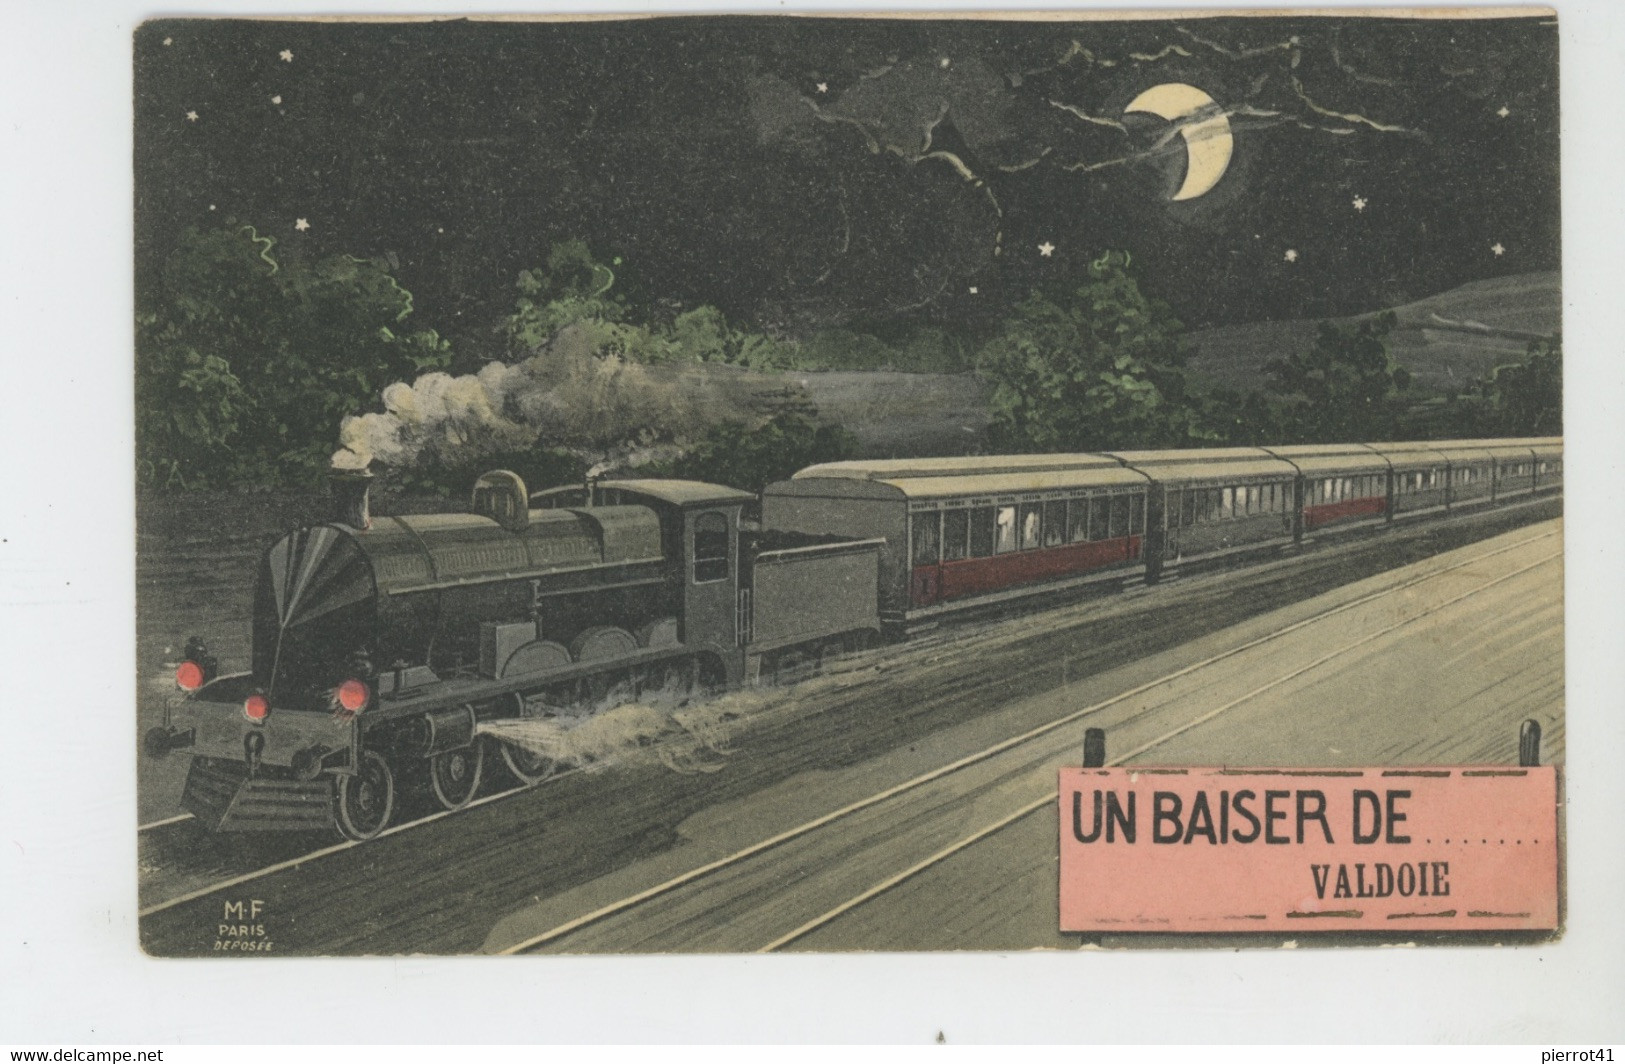 VALDOIE - Jolie Carte Fantaisie Train Et Croissant De Lune "Un Baiser De VALDOIE " - Valdoie